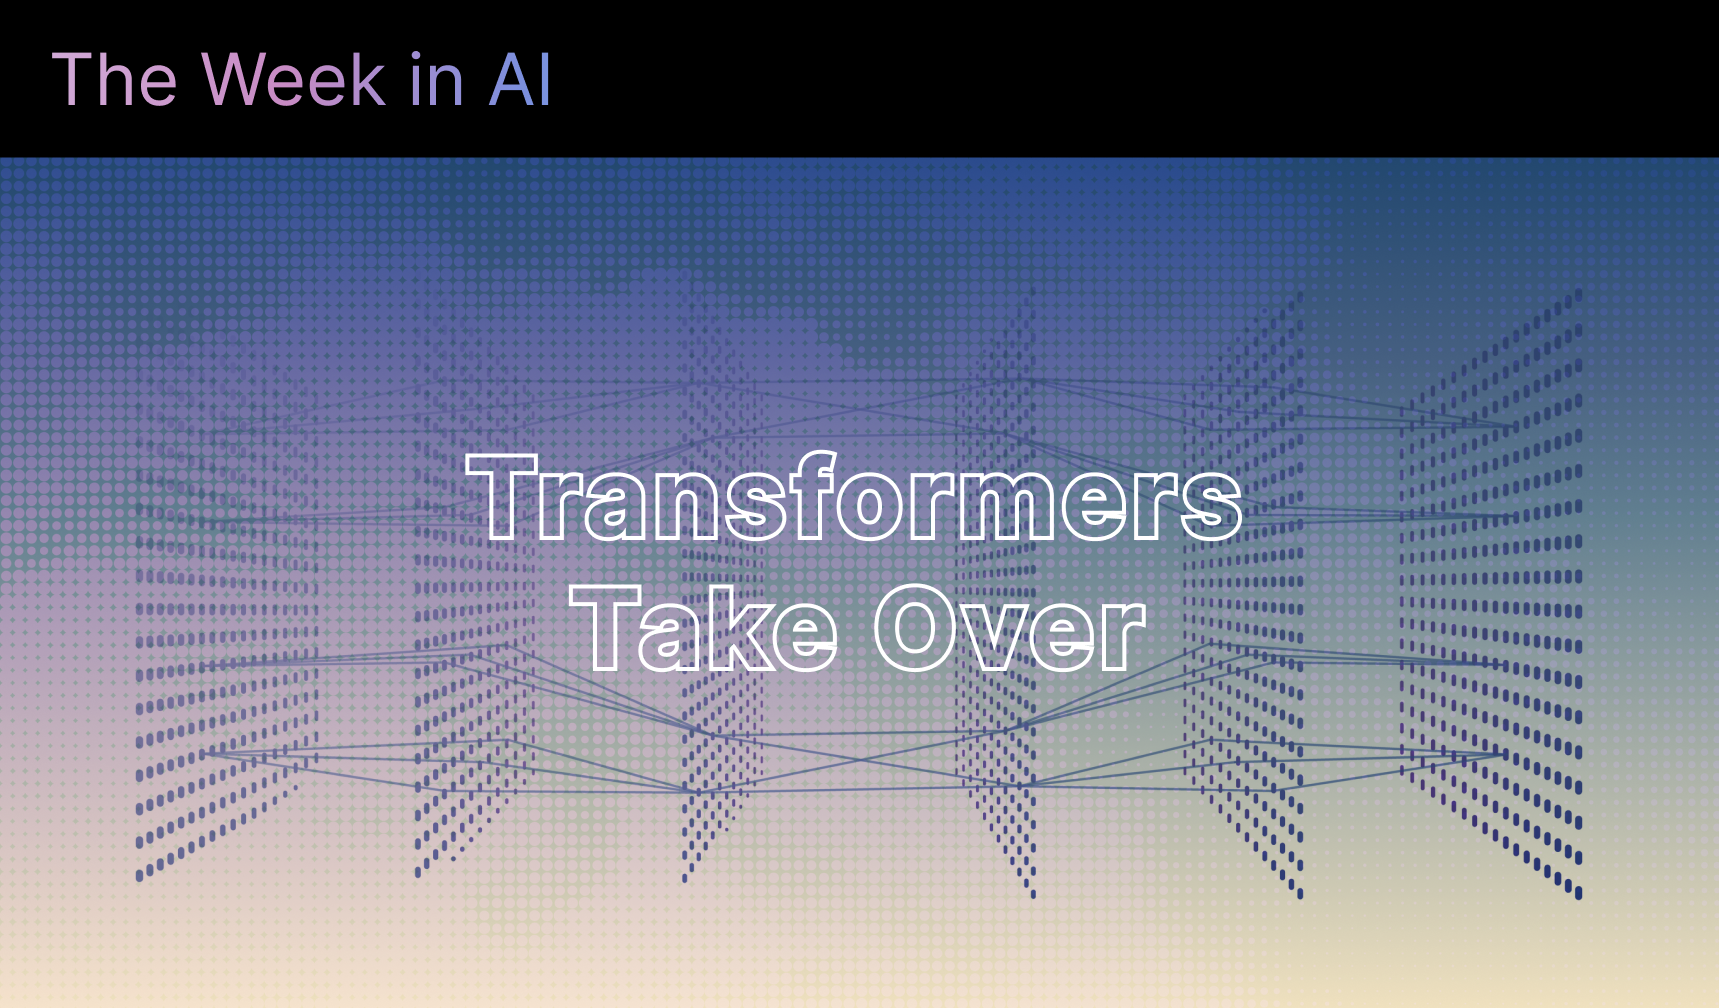 The Week in AI: Transformers Take Over, GPT-3 Beta, AI Gains Sense, ML Boost Algorithms